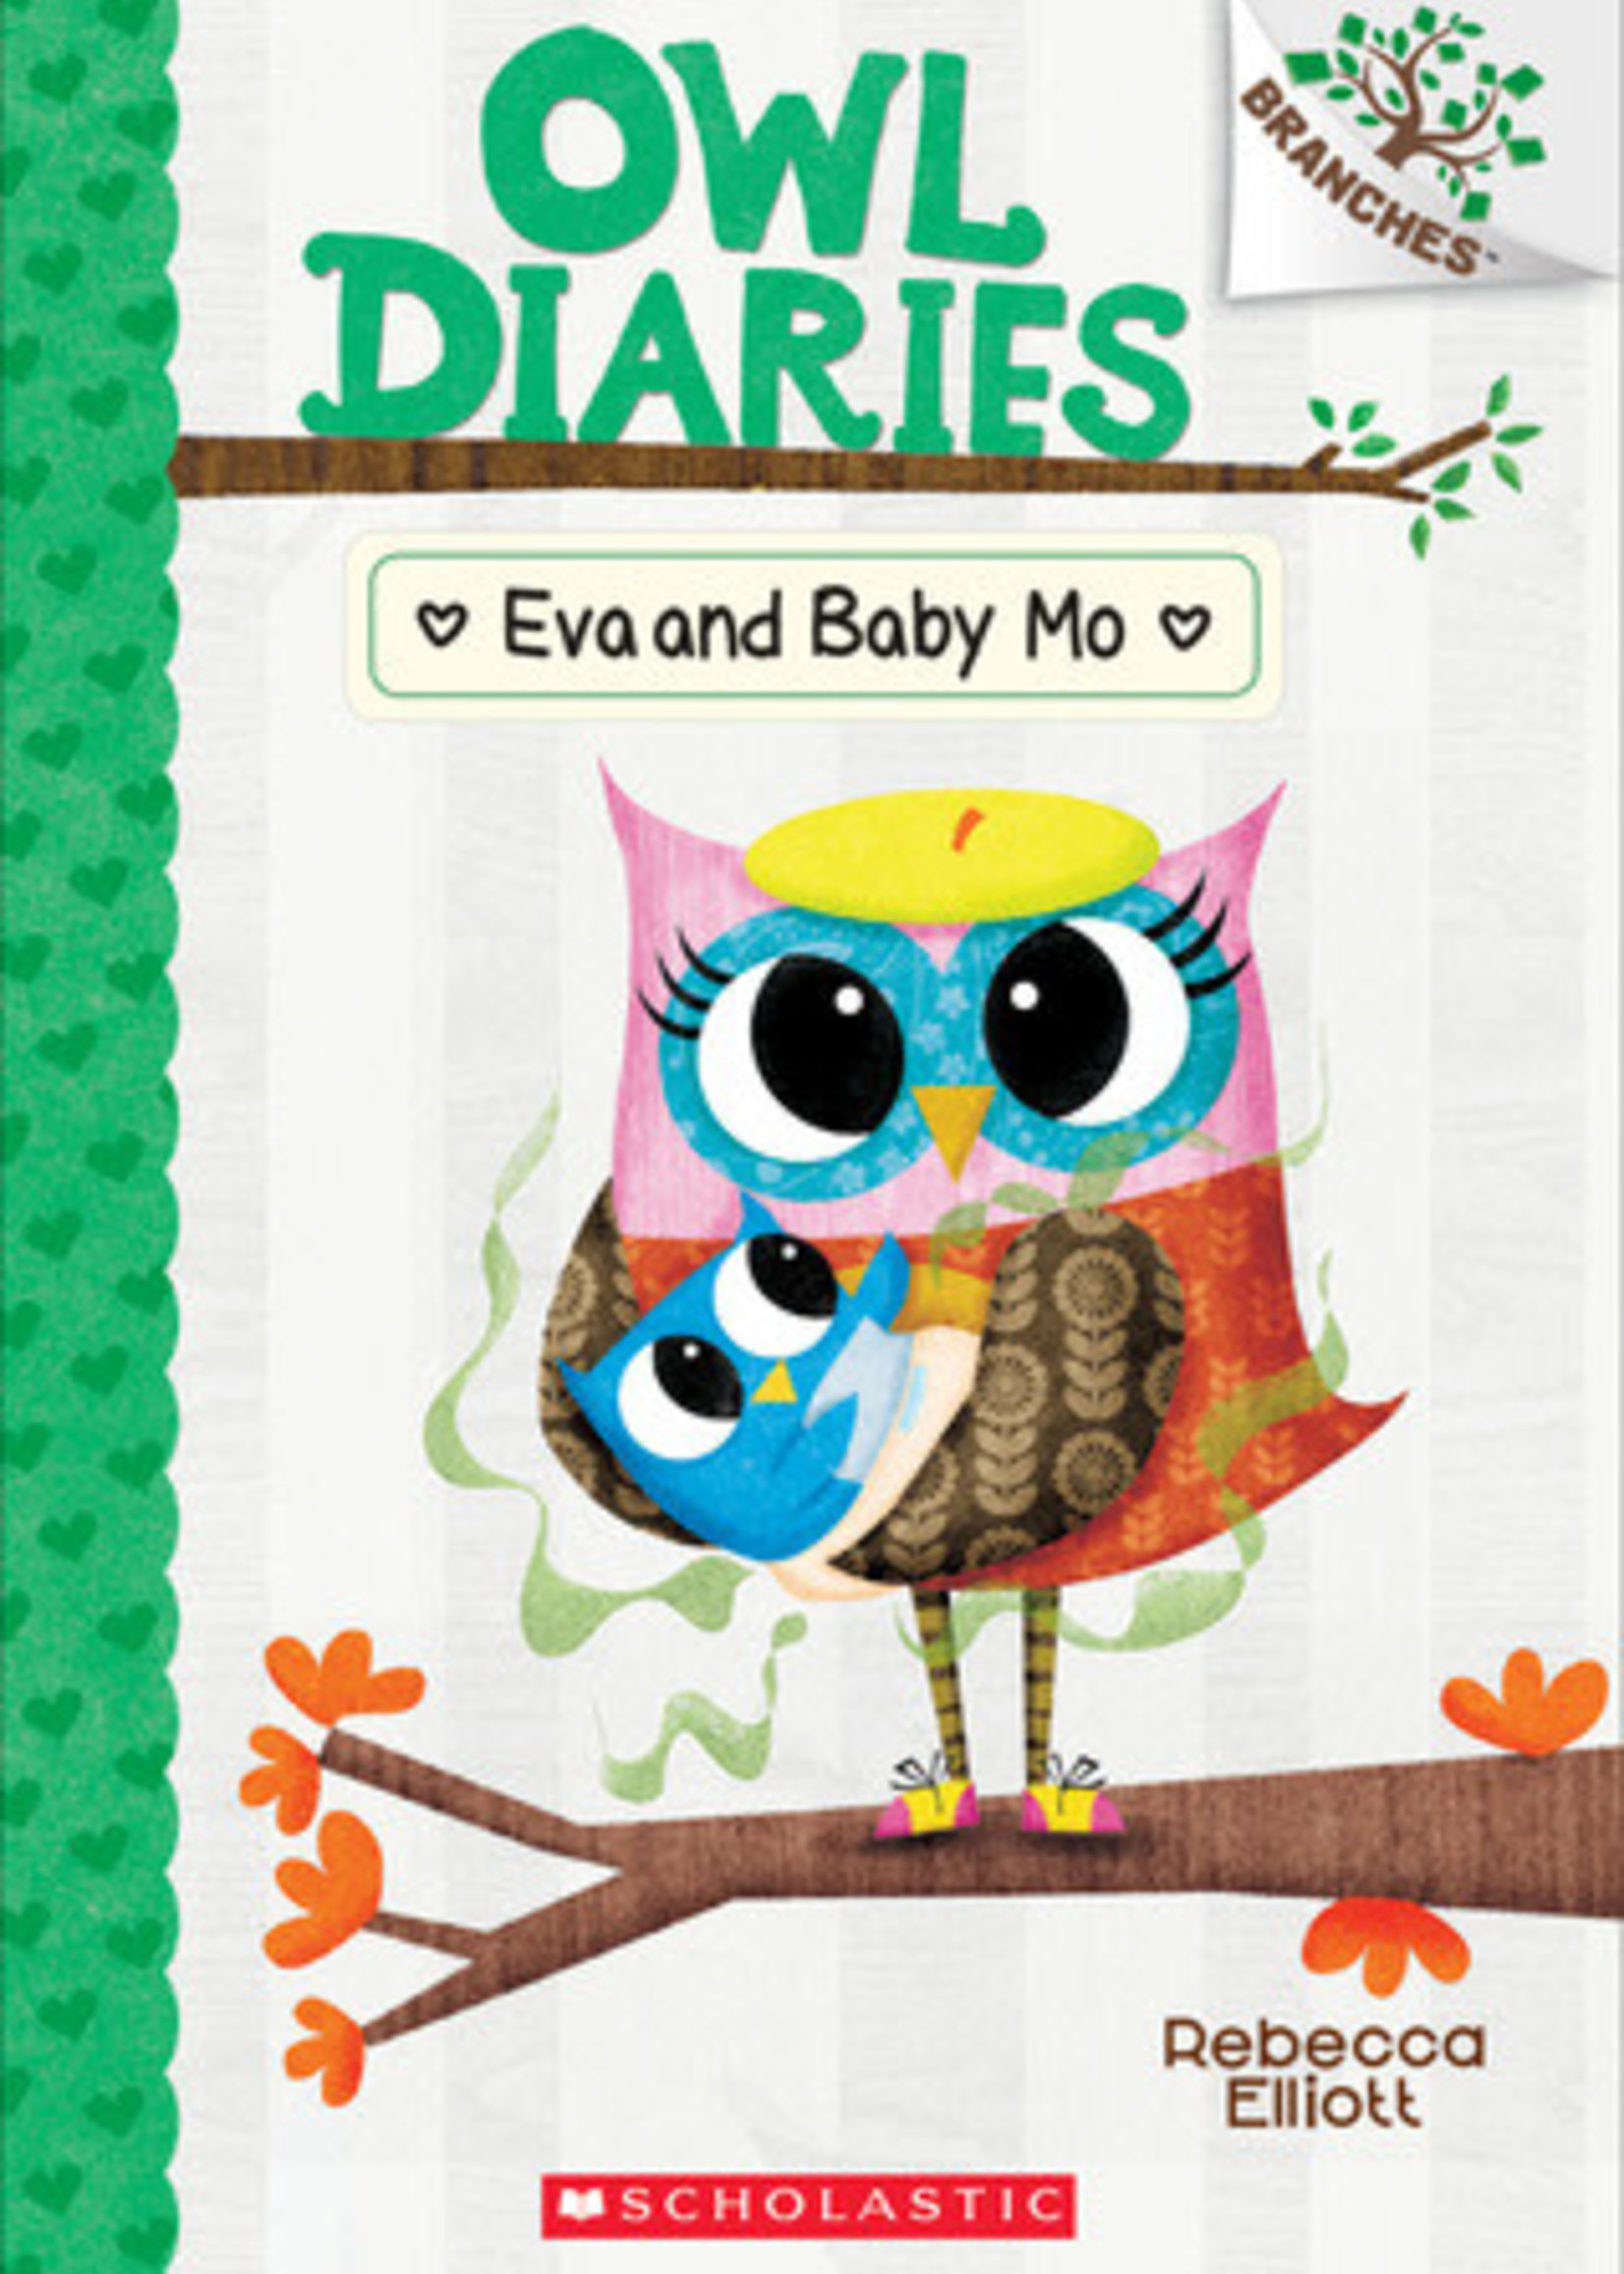 Eva and Baby Mo (Owl Diaries #10) by Rebecca Elliott